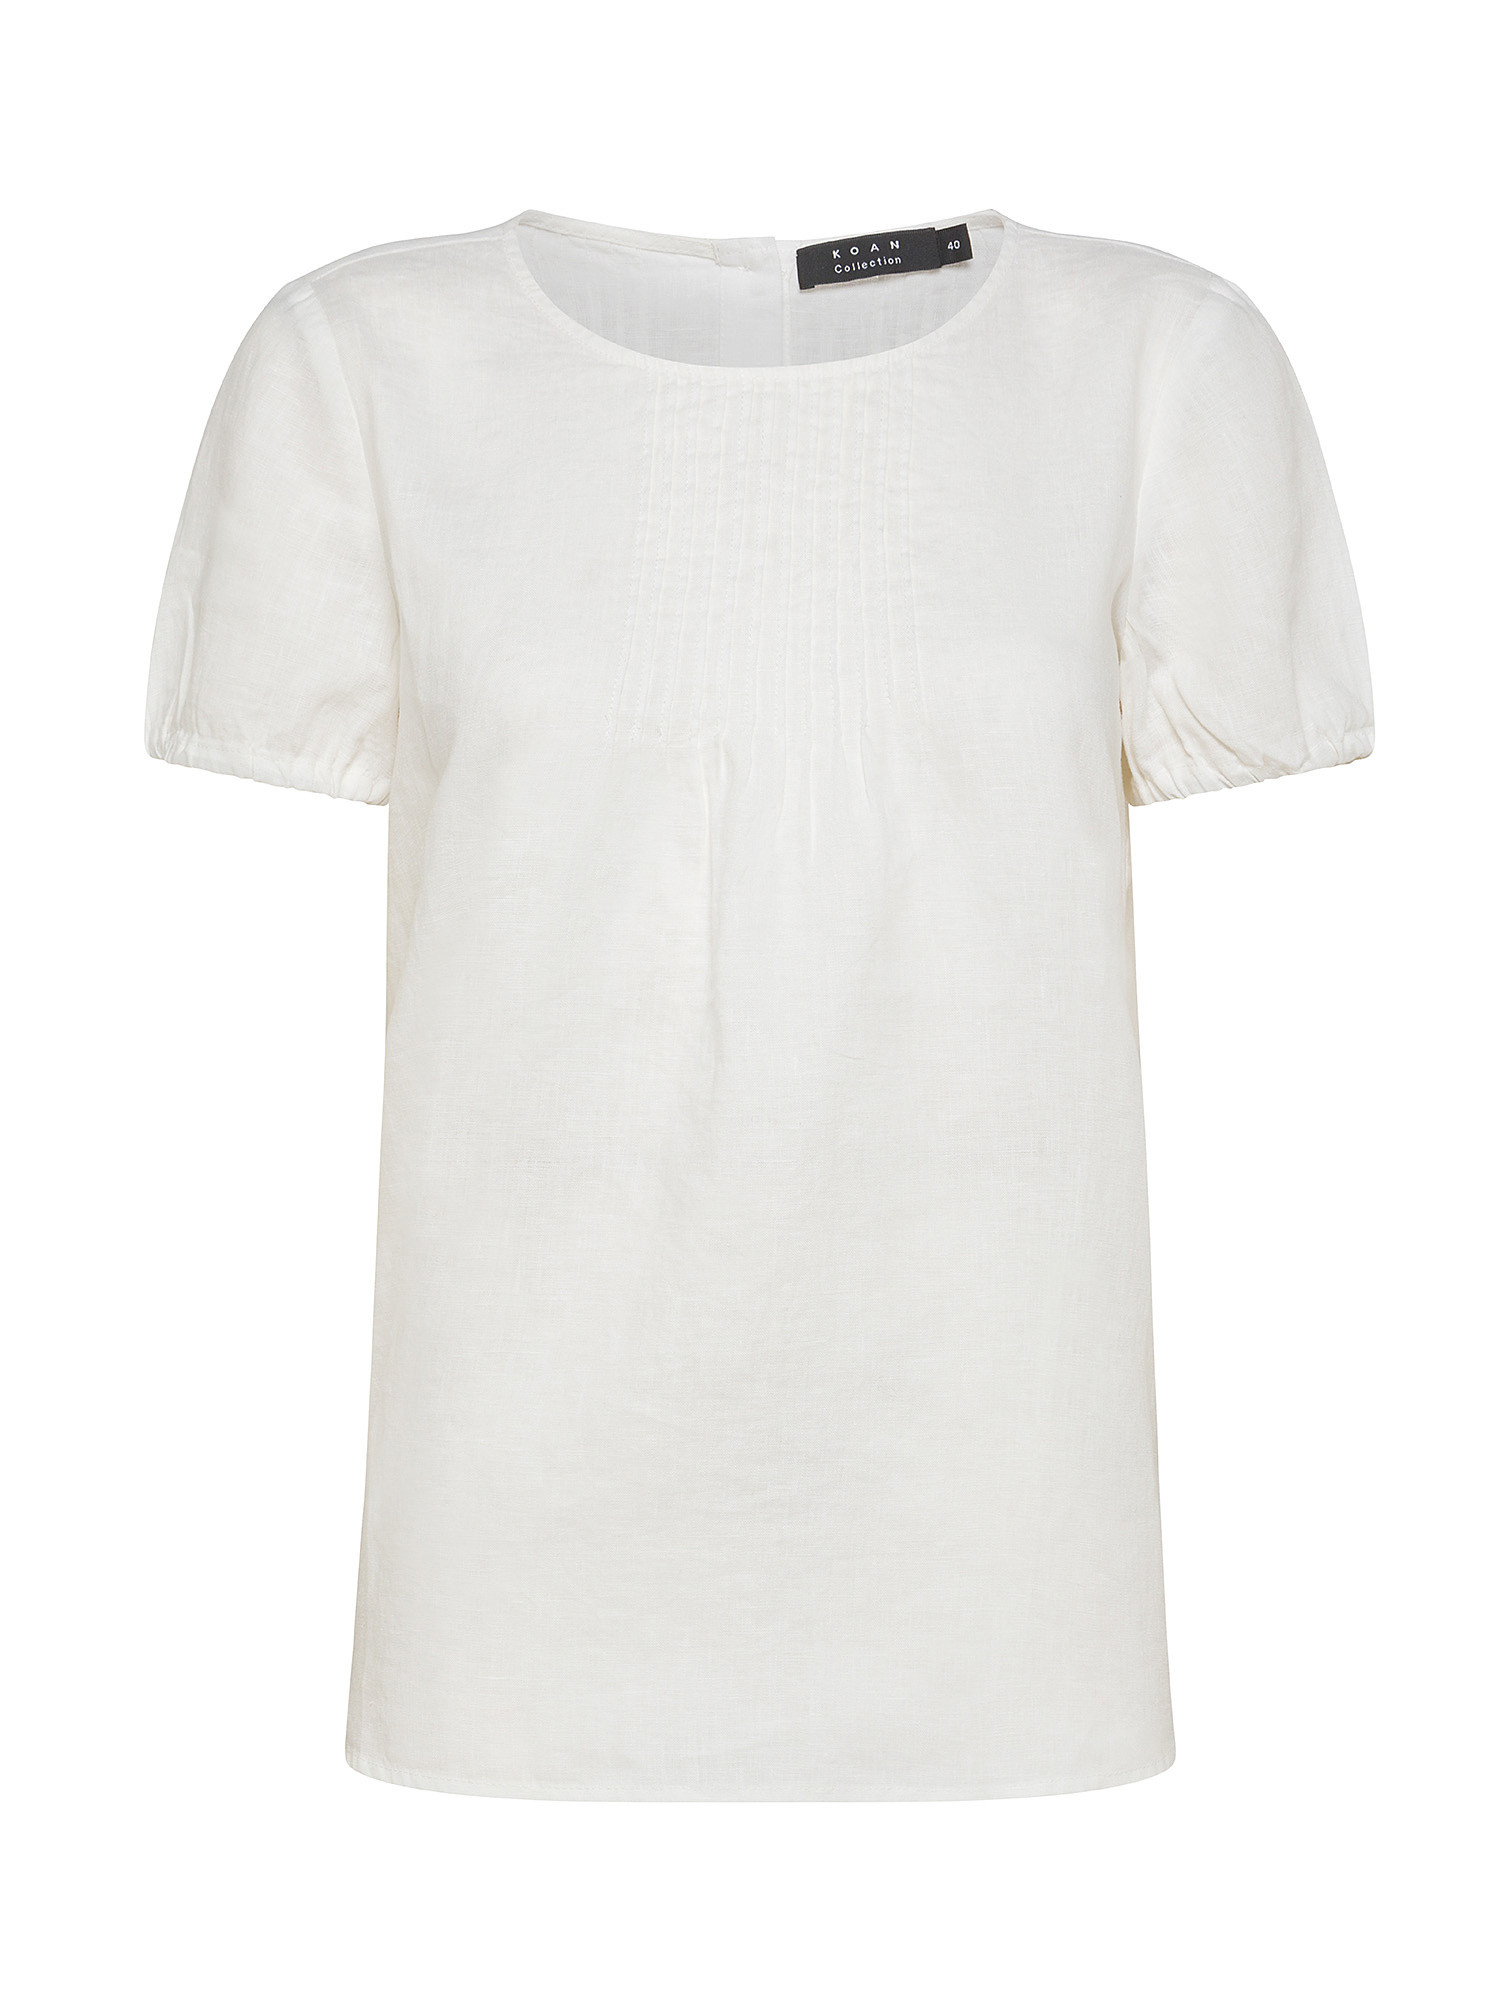 Koan - Linen blouse, White, large image number 0